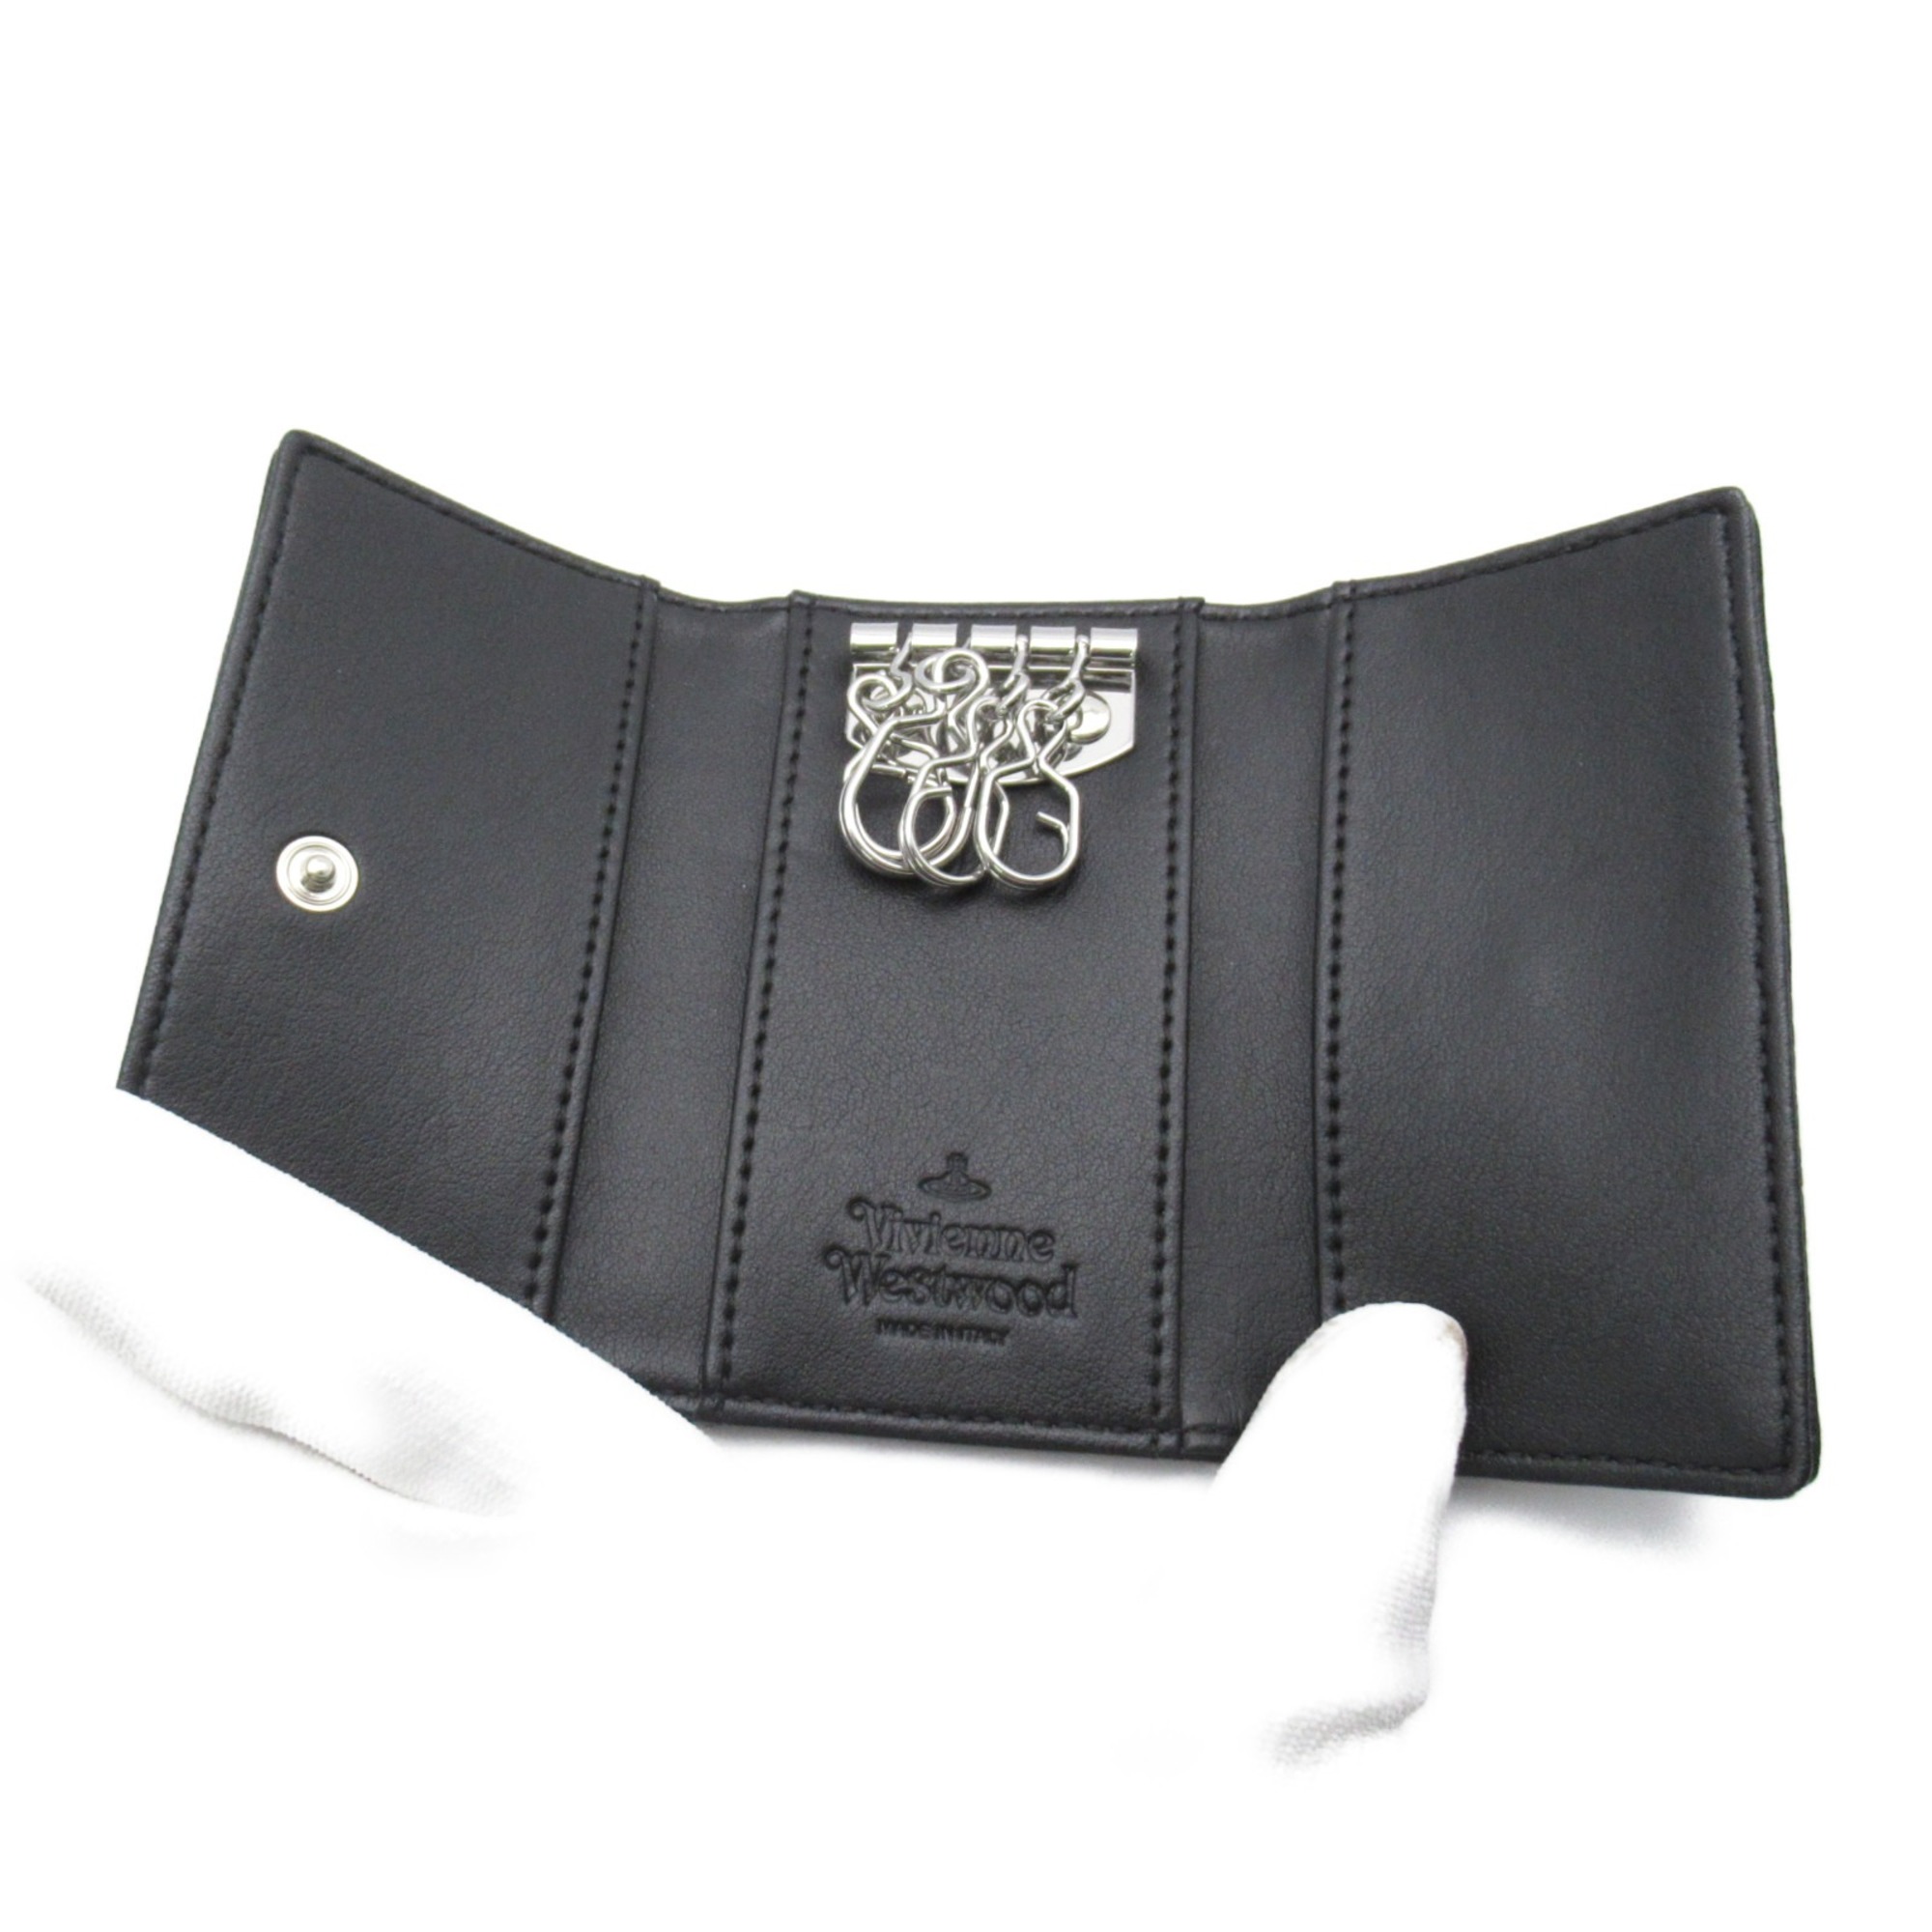 Vivienne Westwood 4 hooks key holder Black leather Grain leather 5102000102103N401